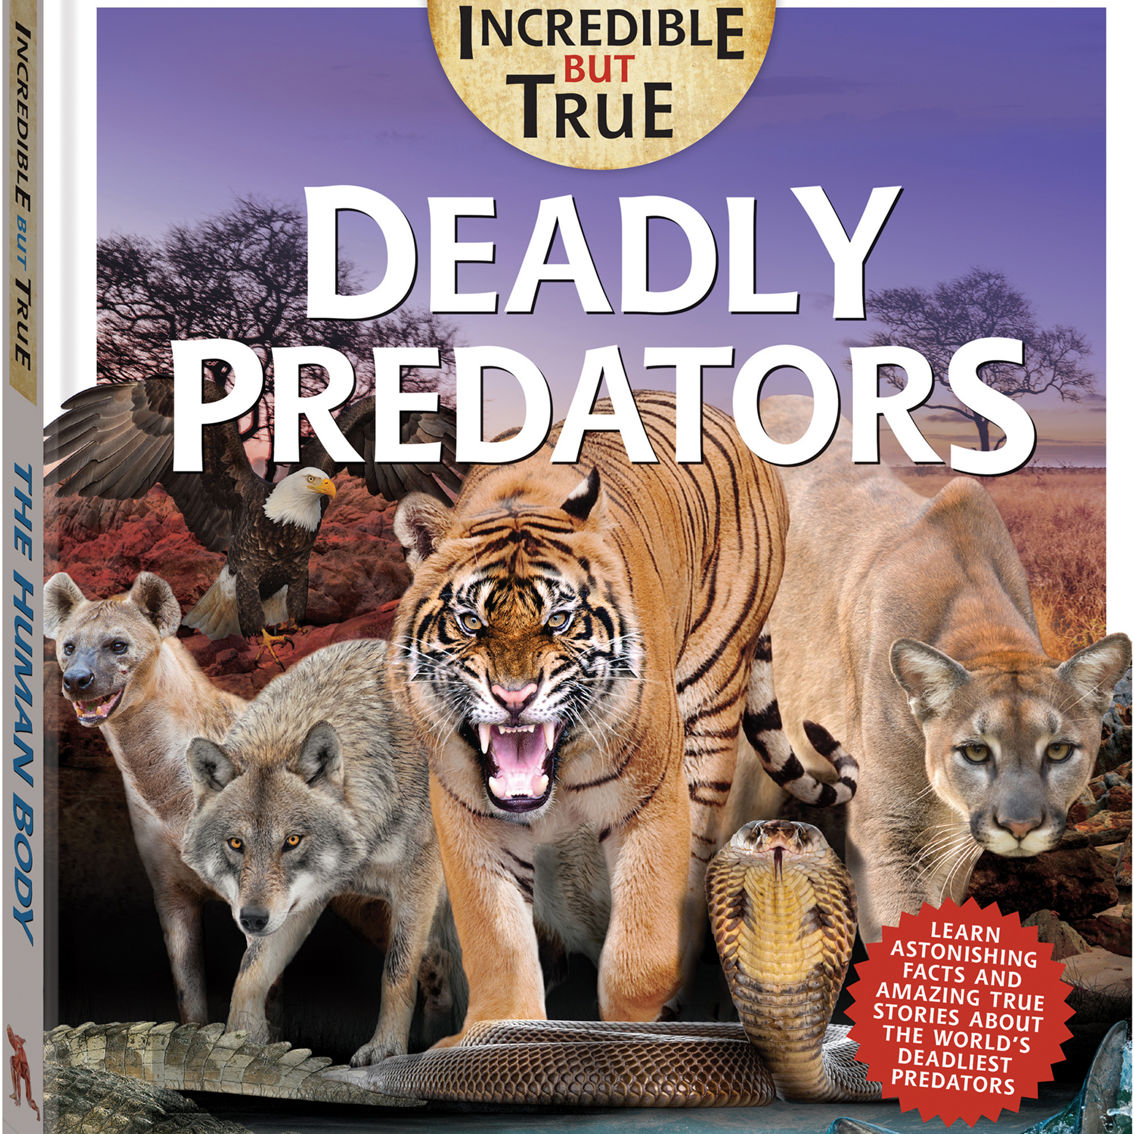 Incredible But True: Deadly Predators - Image 2 of 5